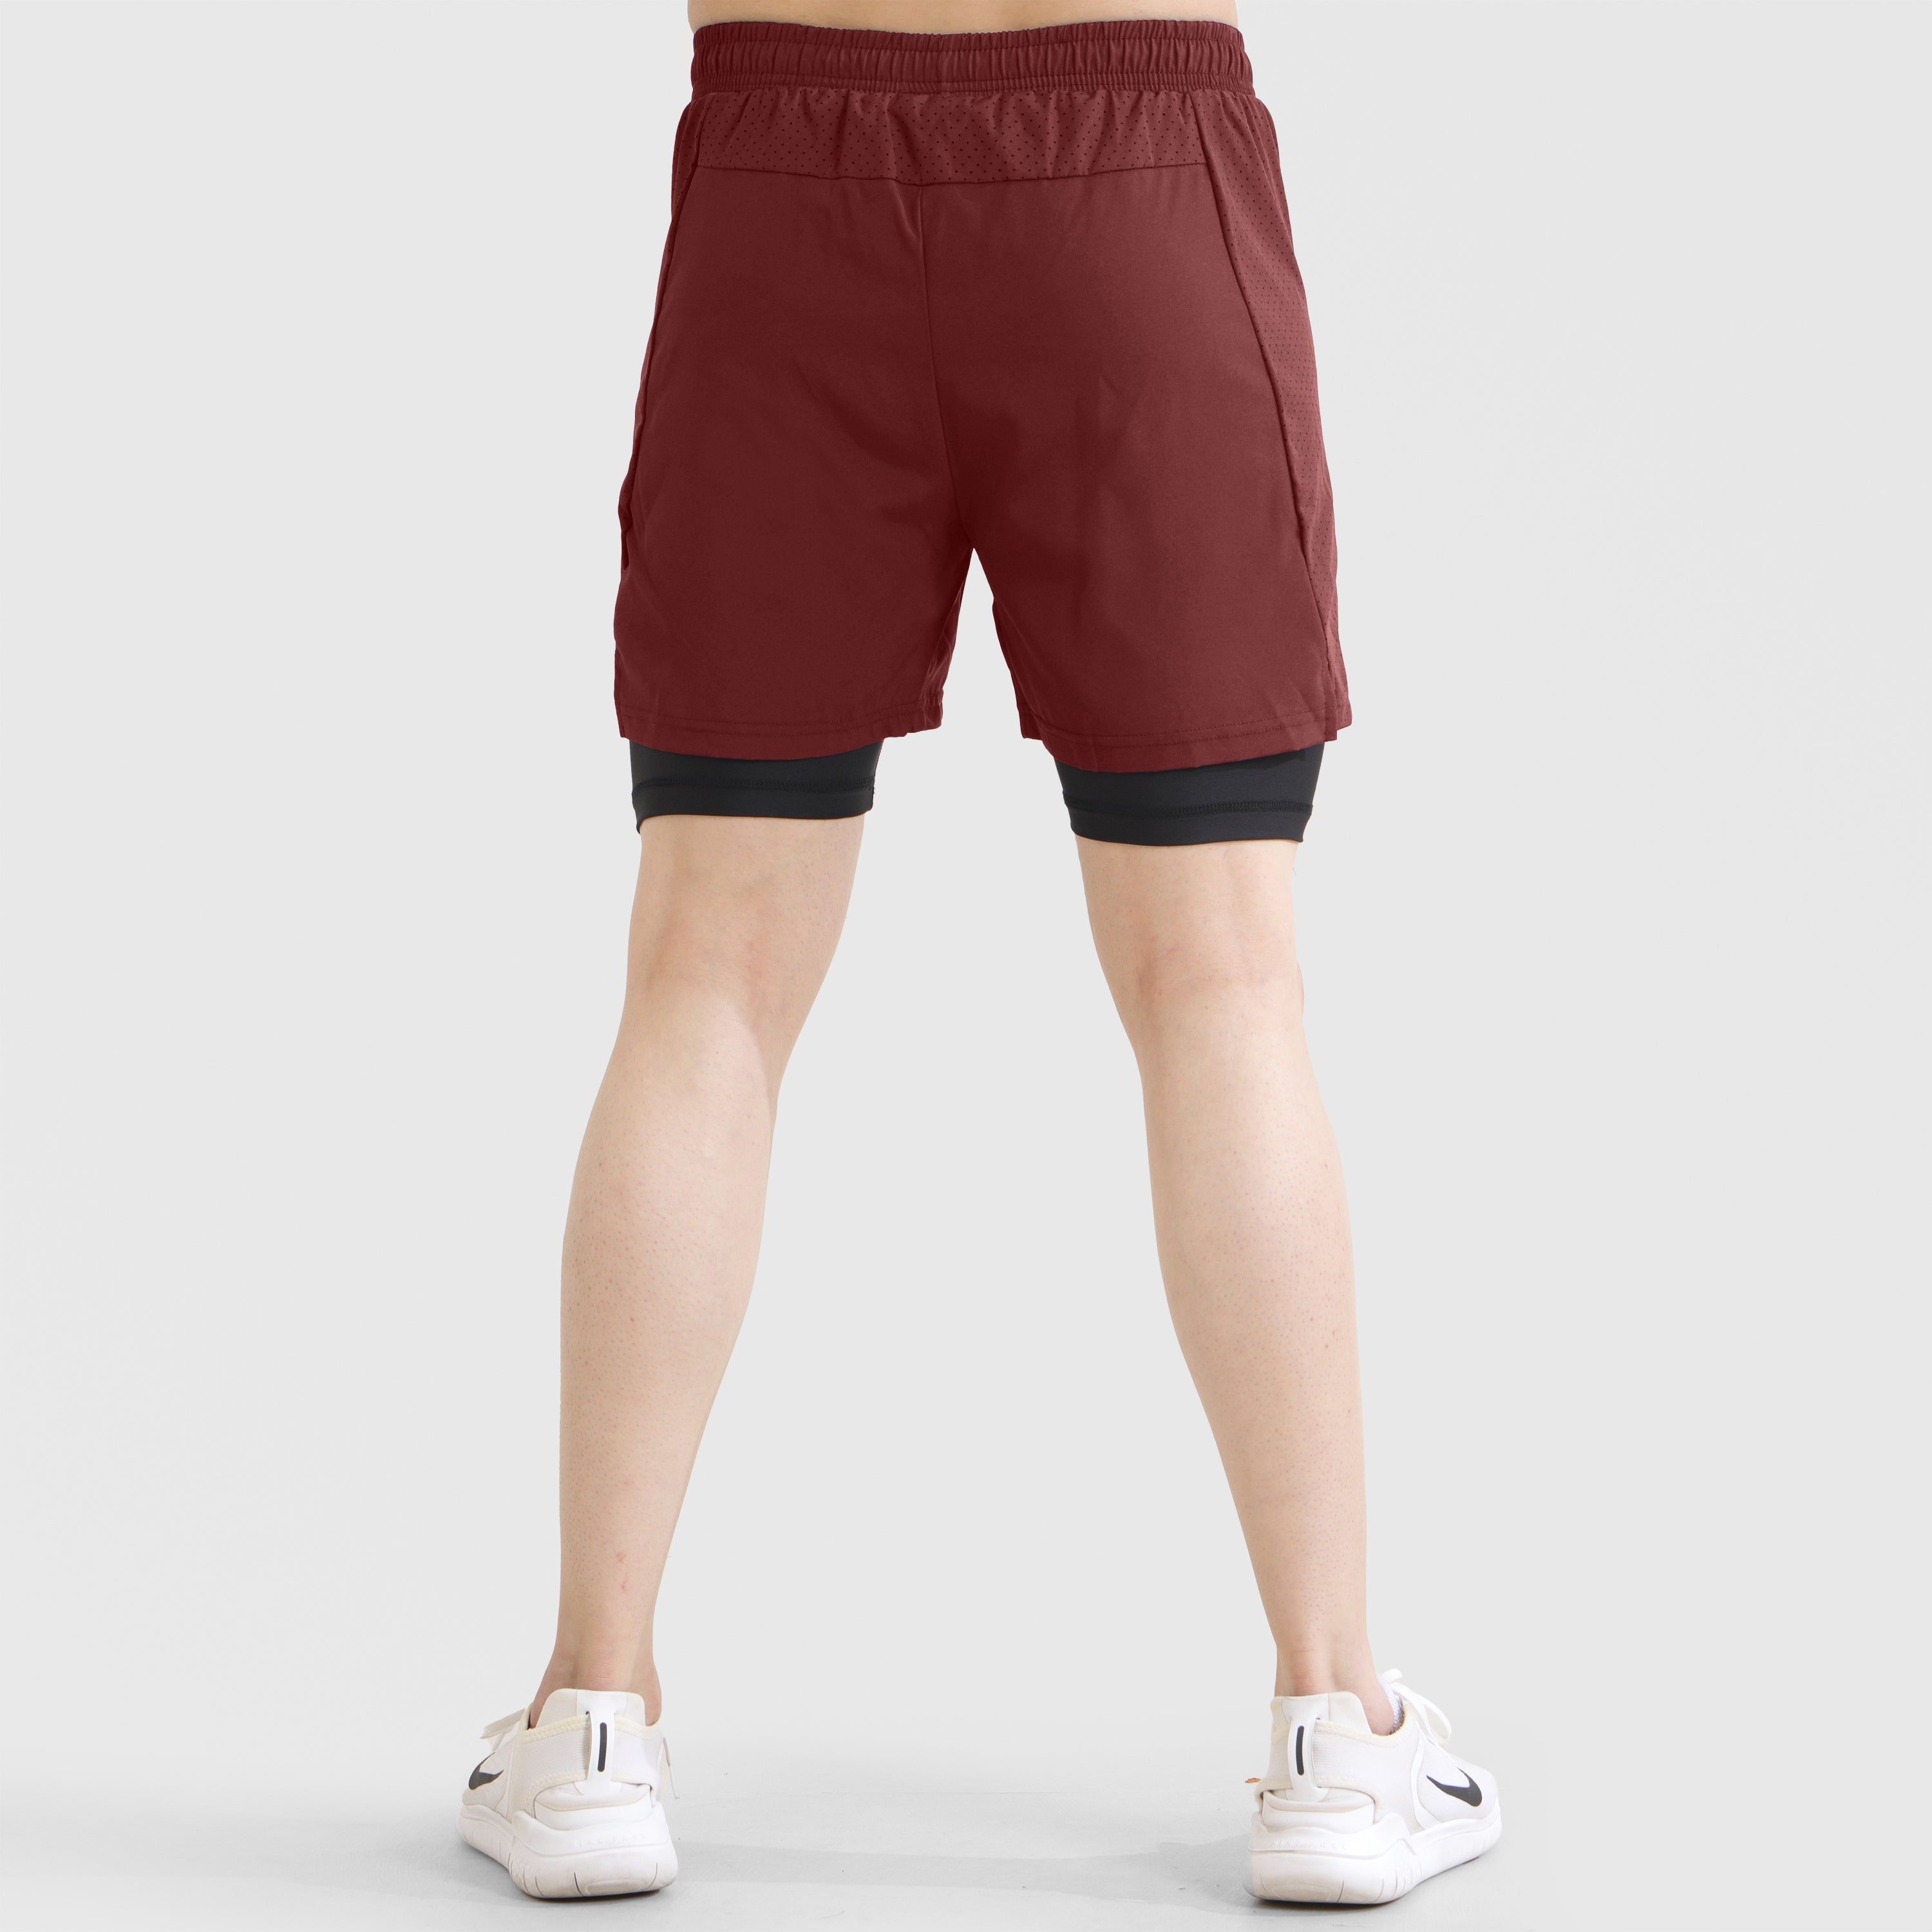 Laser Grip Shorts (Maroon)